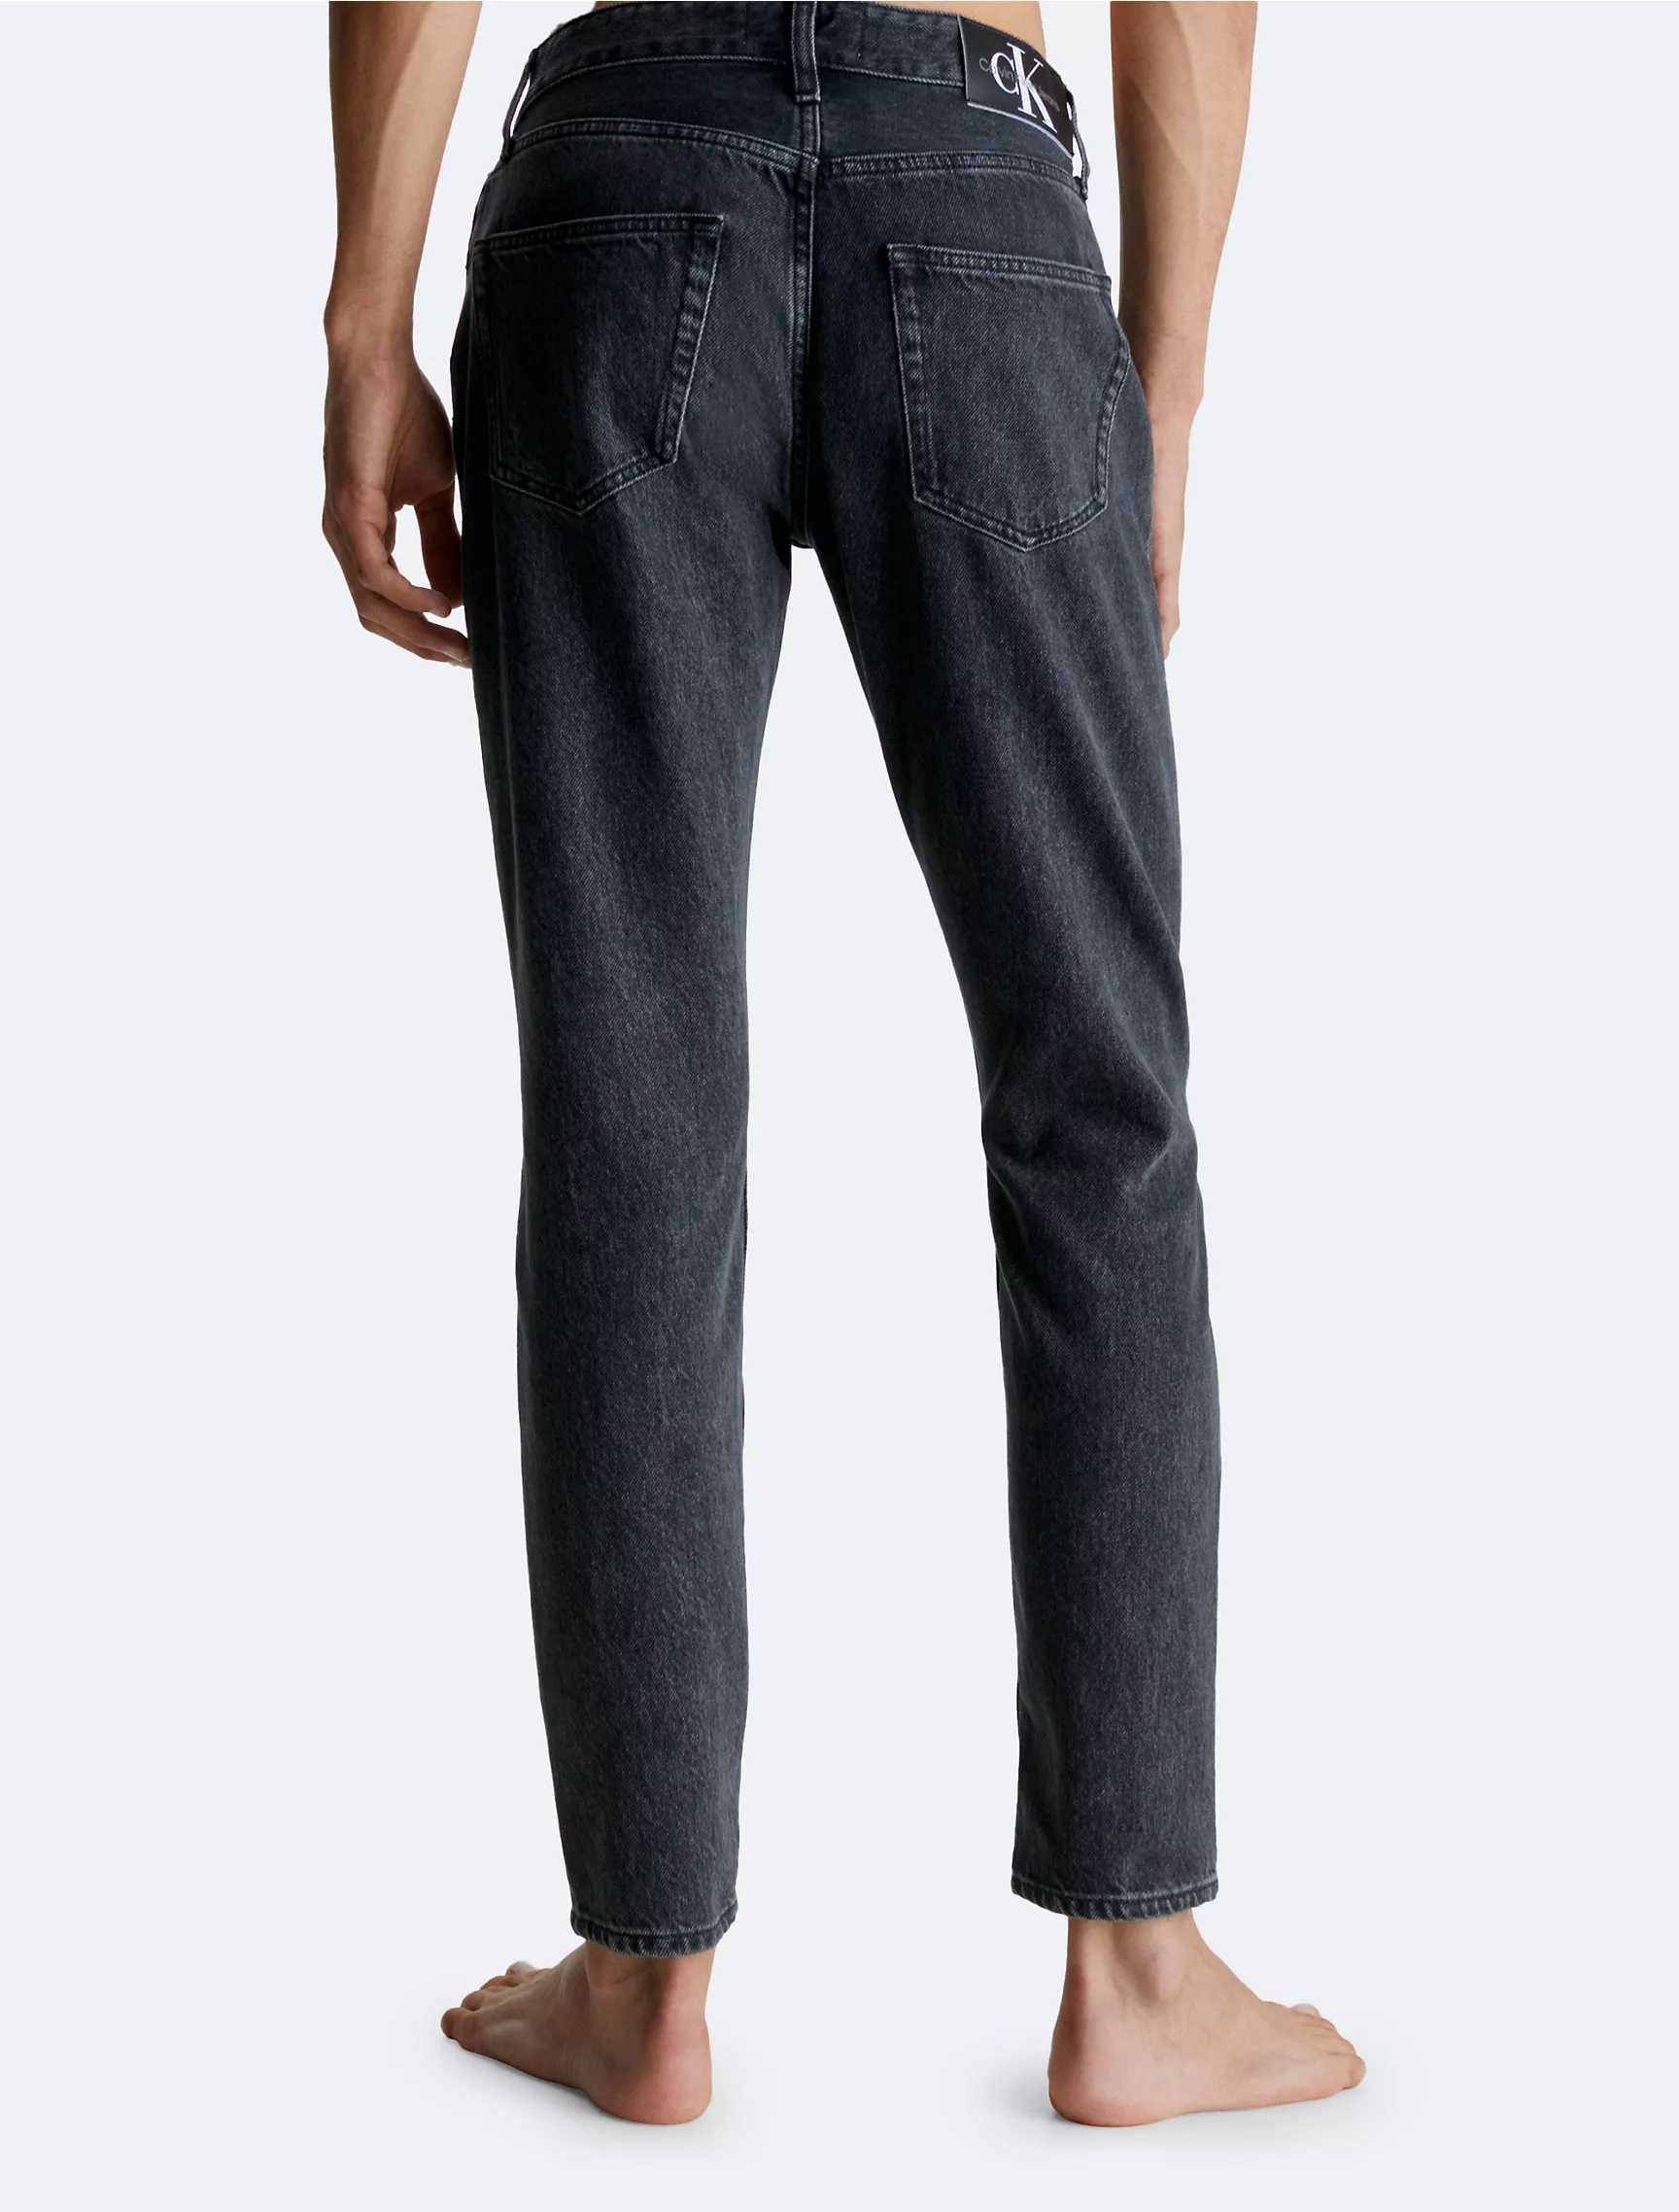 Новые джинсы calvin klein (ck relaxed fit dad jeans) с америки 32m